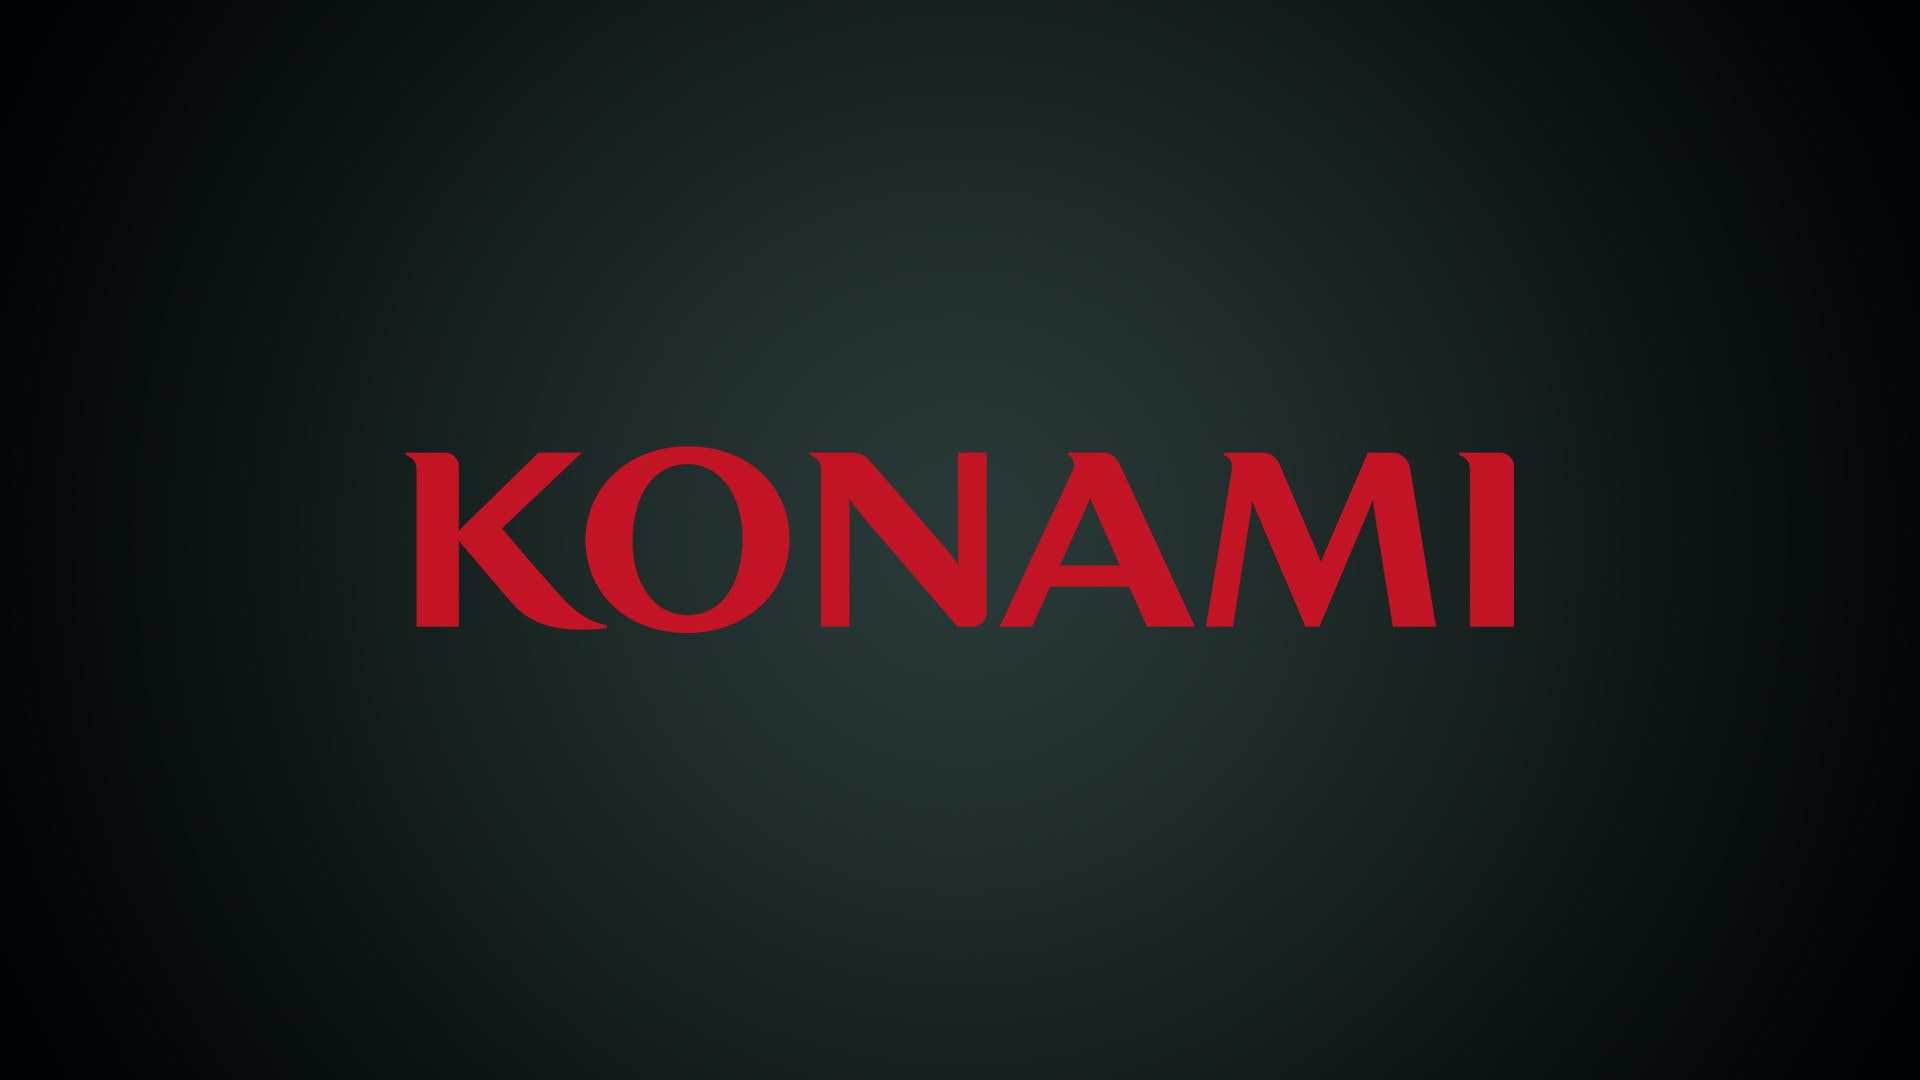 KONAMI is mentioned in the photo, which is related to Xiaolang, including Dakonami, Konami 80s Arcade Gallery, Konami Sports Club Co., Ltd.